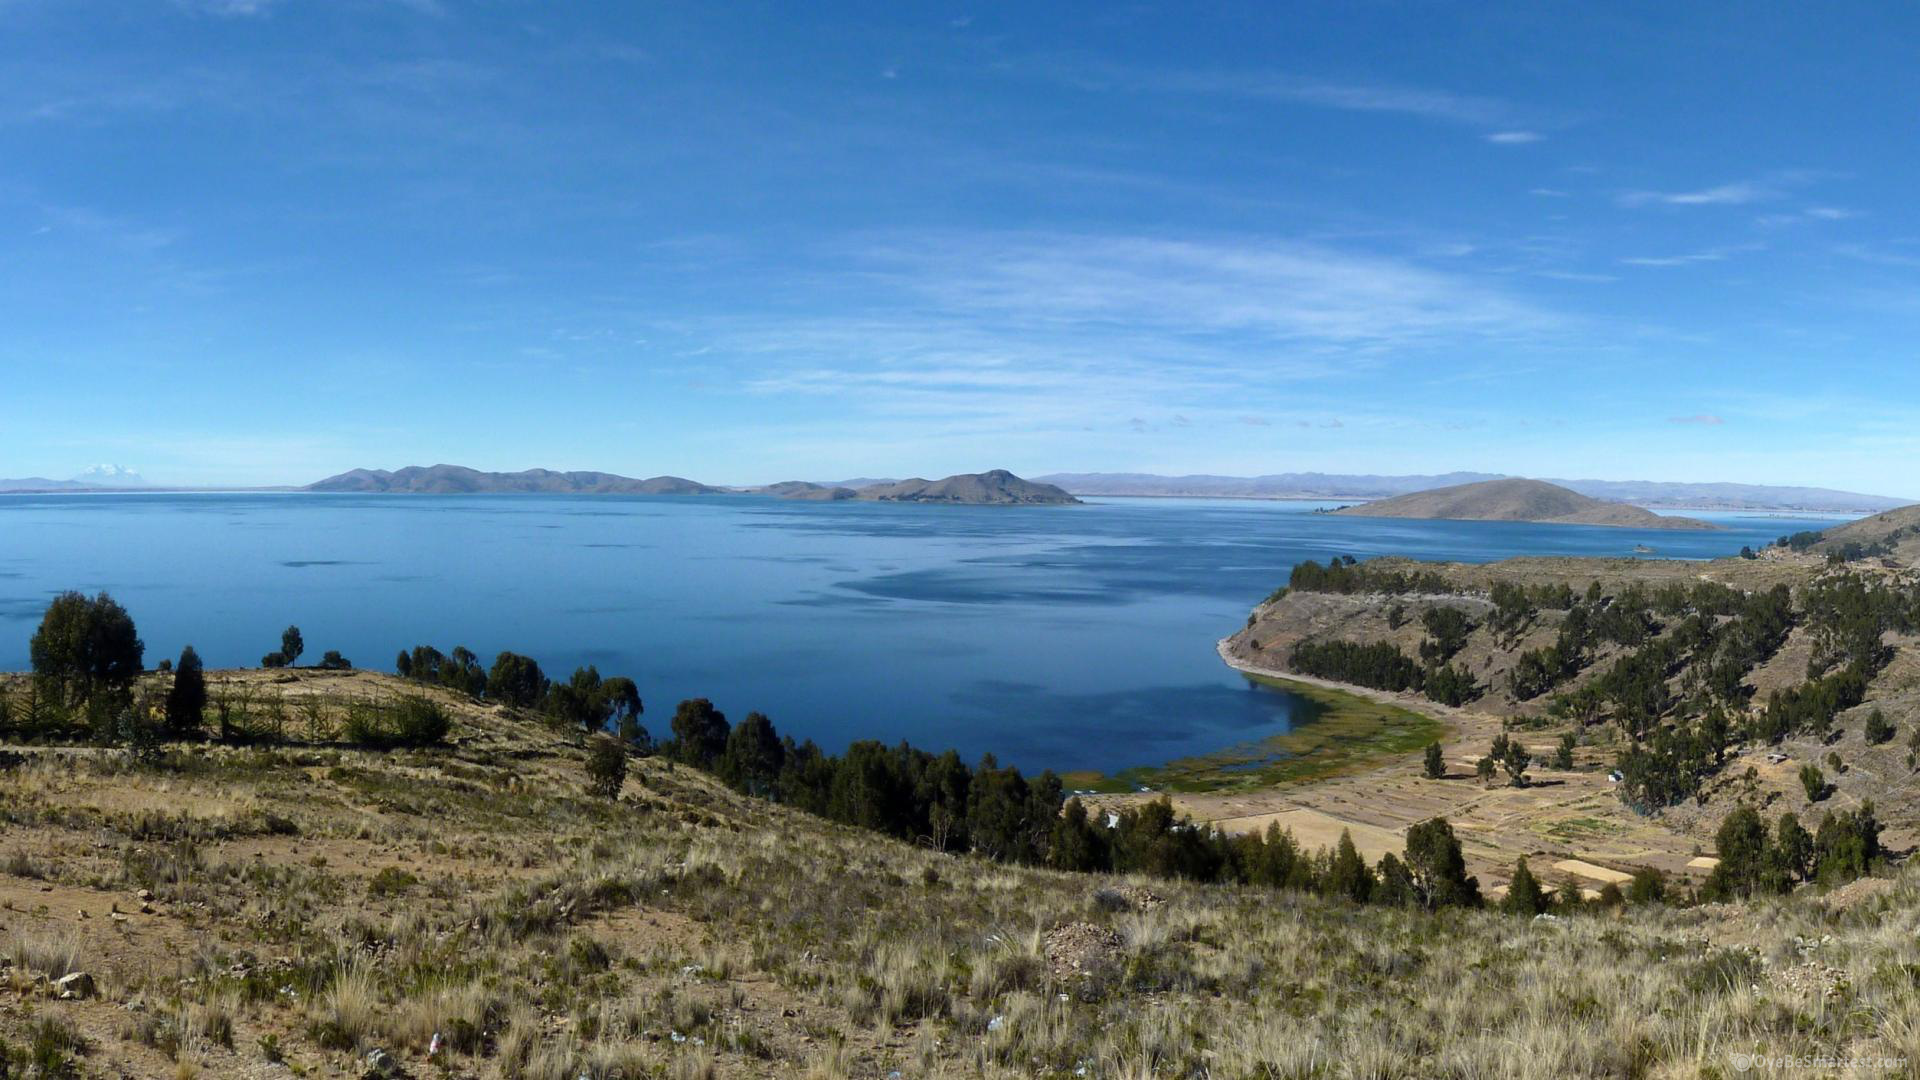 Lake Titicaca, HD wallpapers, Nature beauty, Free download, 1920x1080 Full HD Desktop